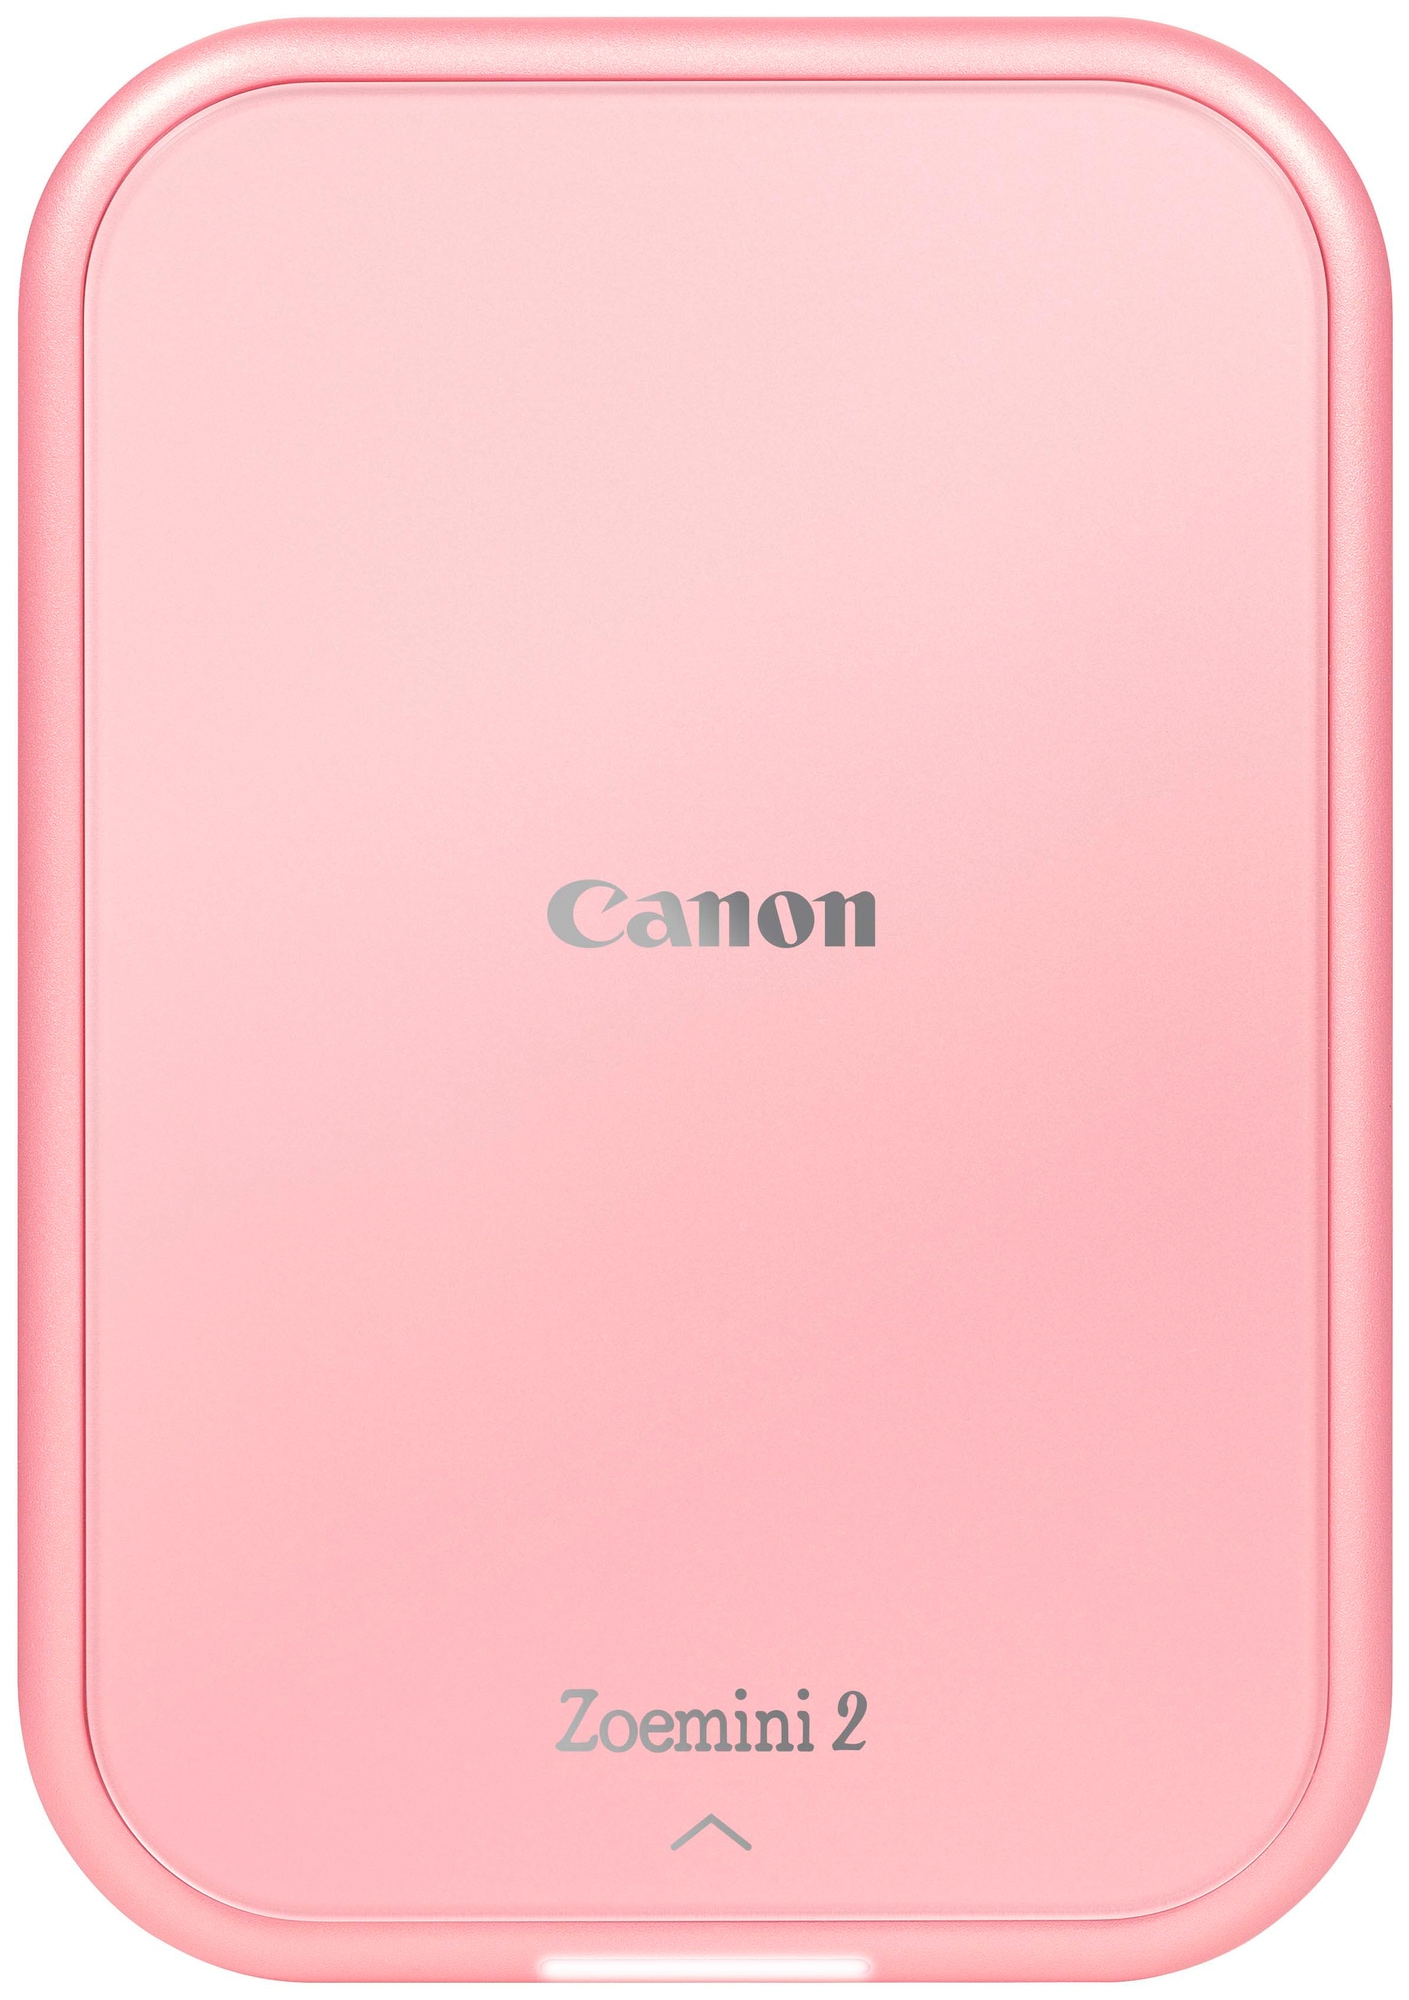 Canon Zoemini 2 mobil fotoprinter (Rose Gold) | Elgiganten